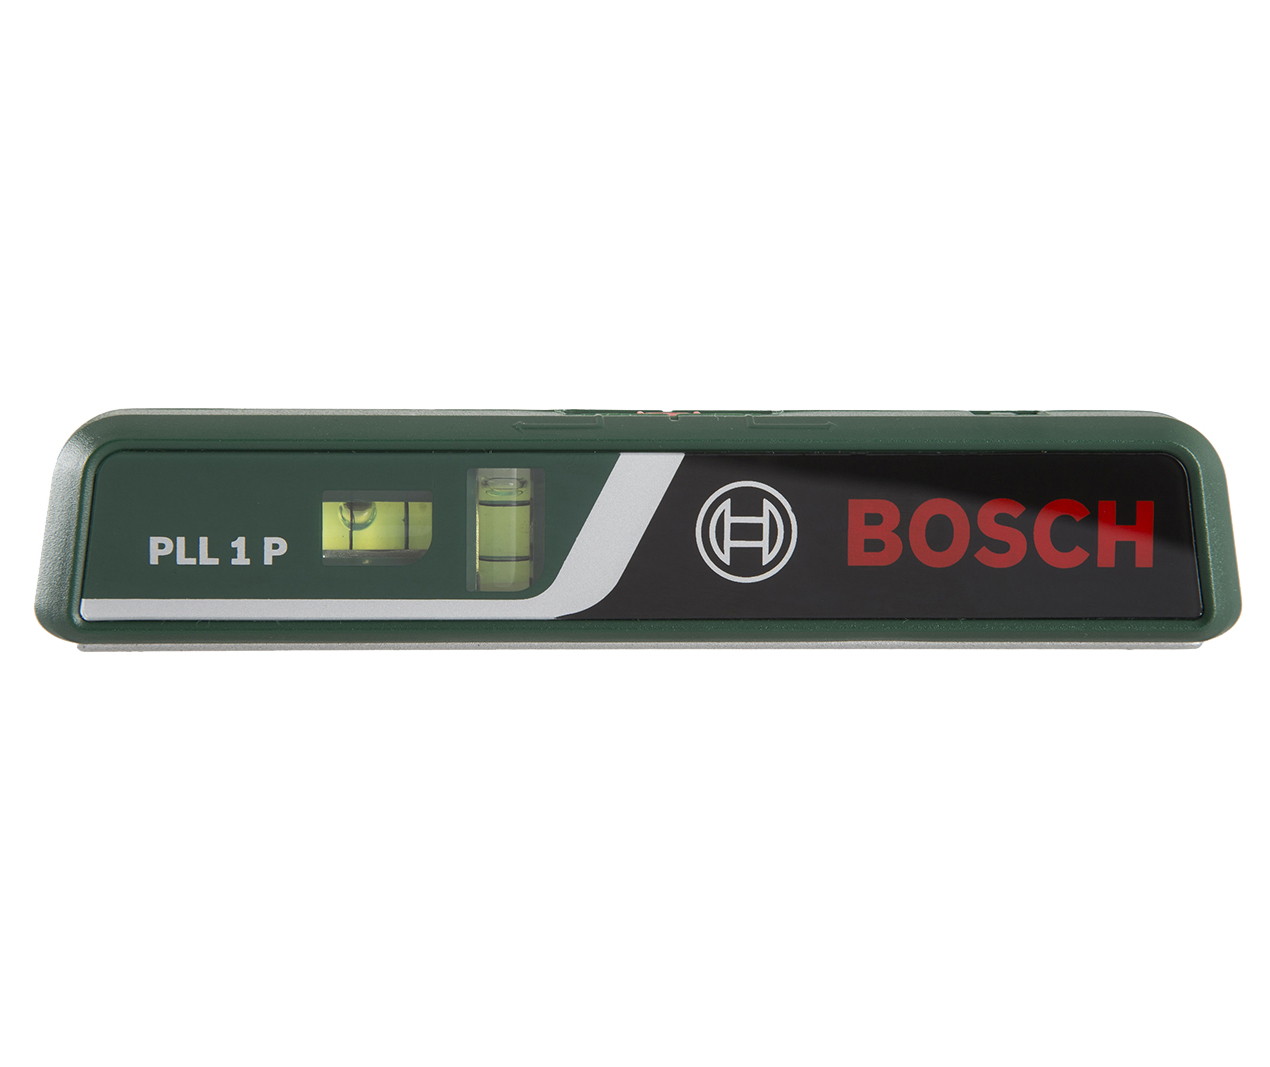 Уровень Bosch Pll 1 p